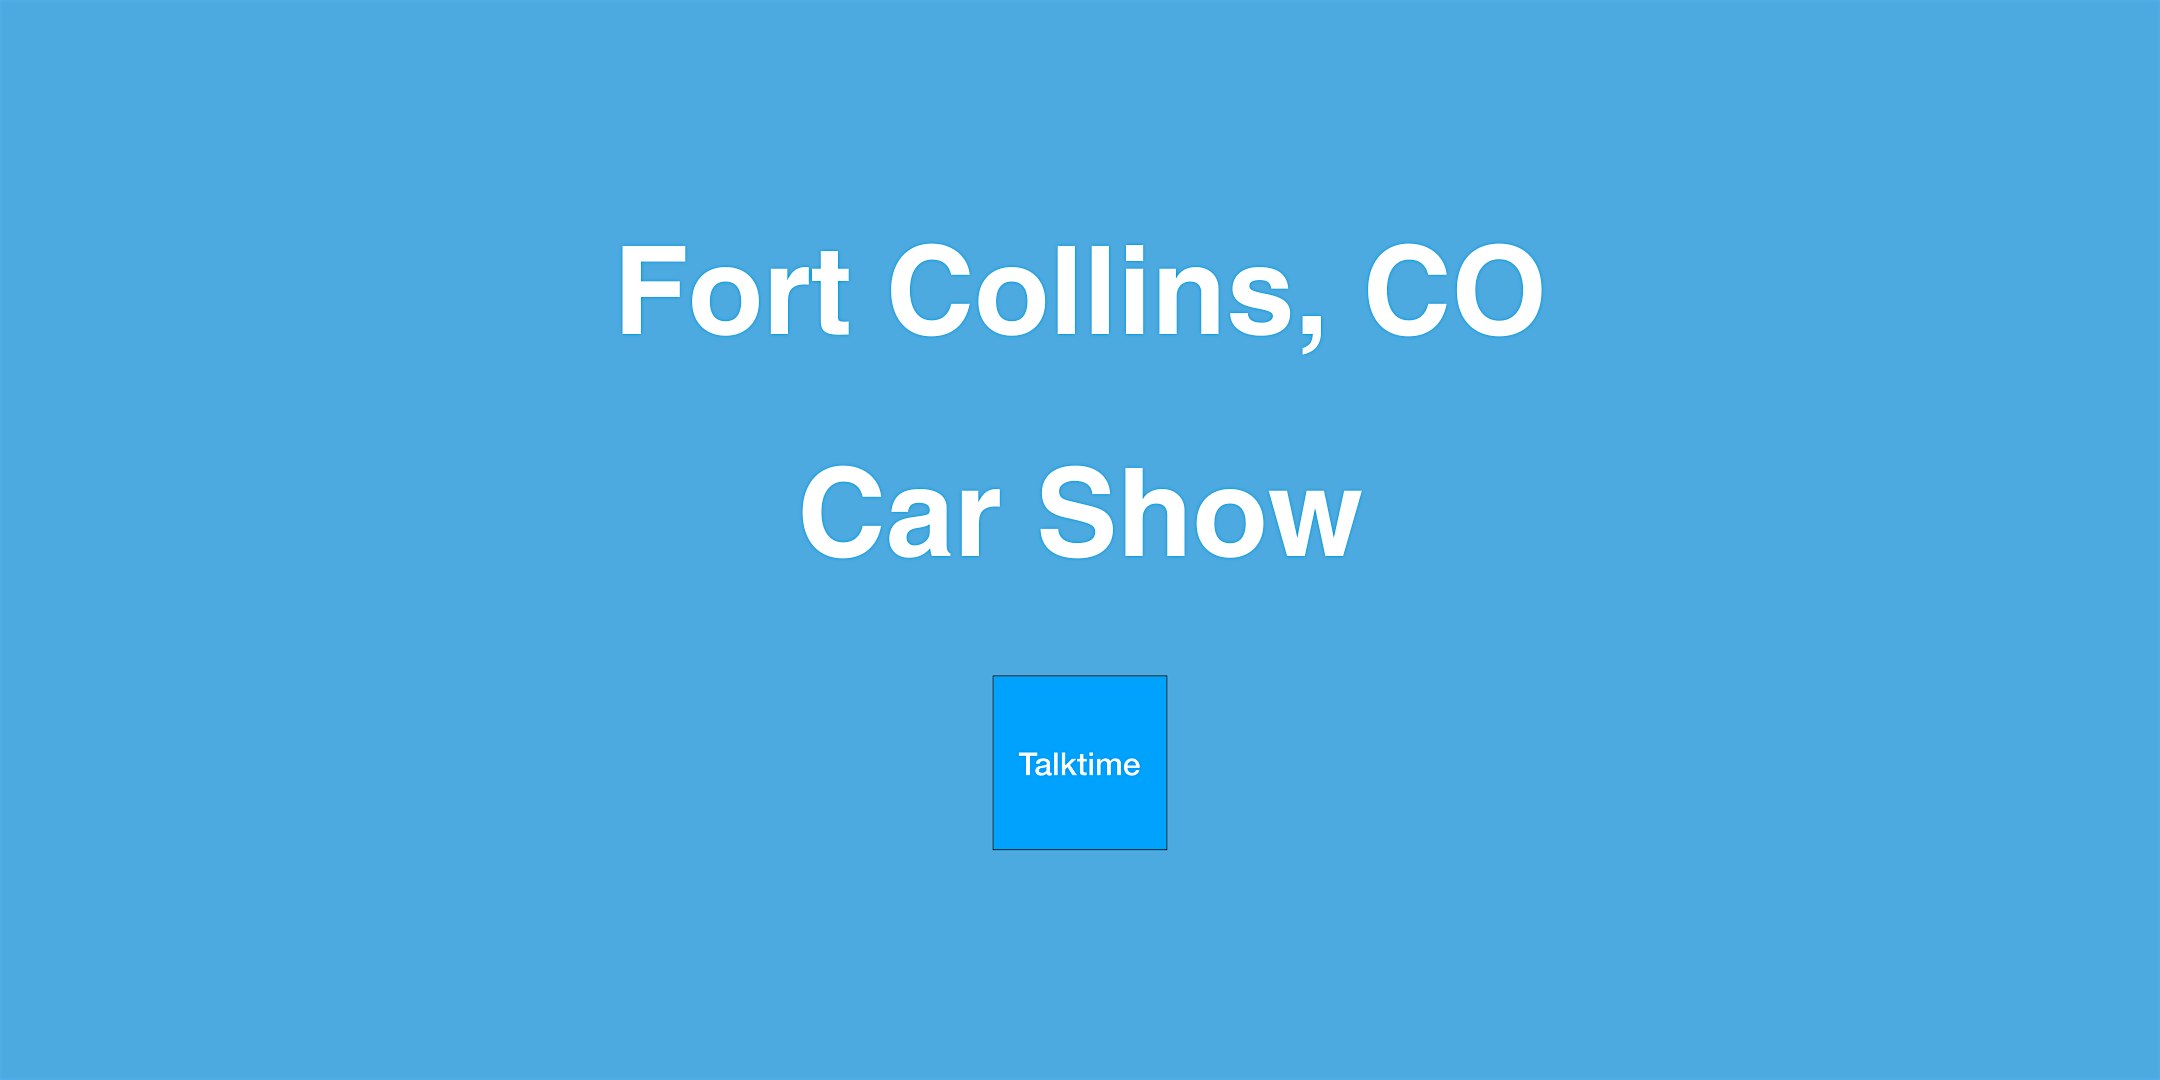 Car Show - Fort Collins